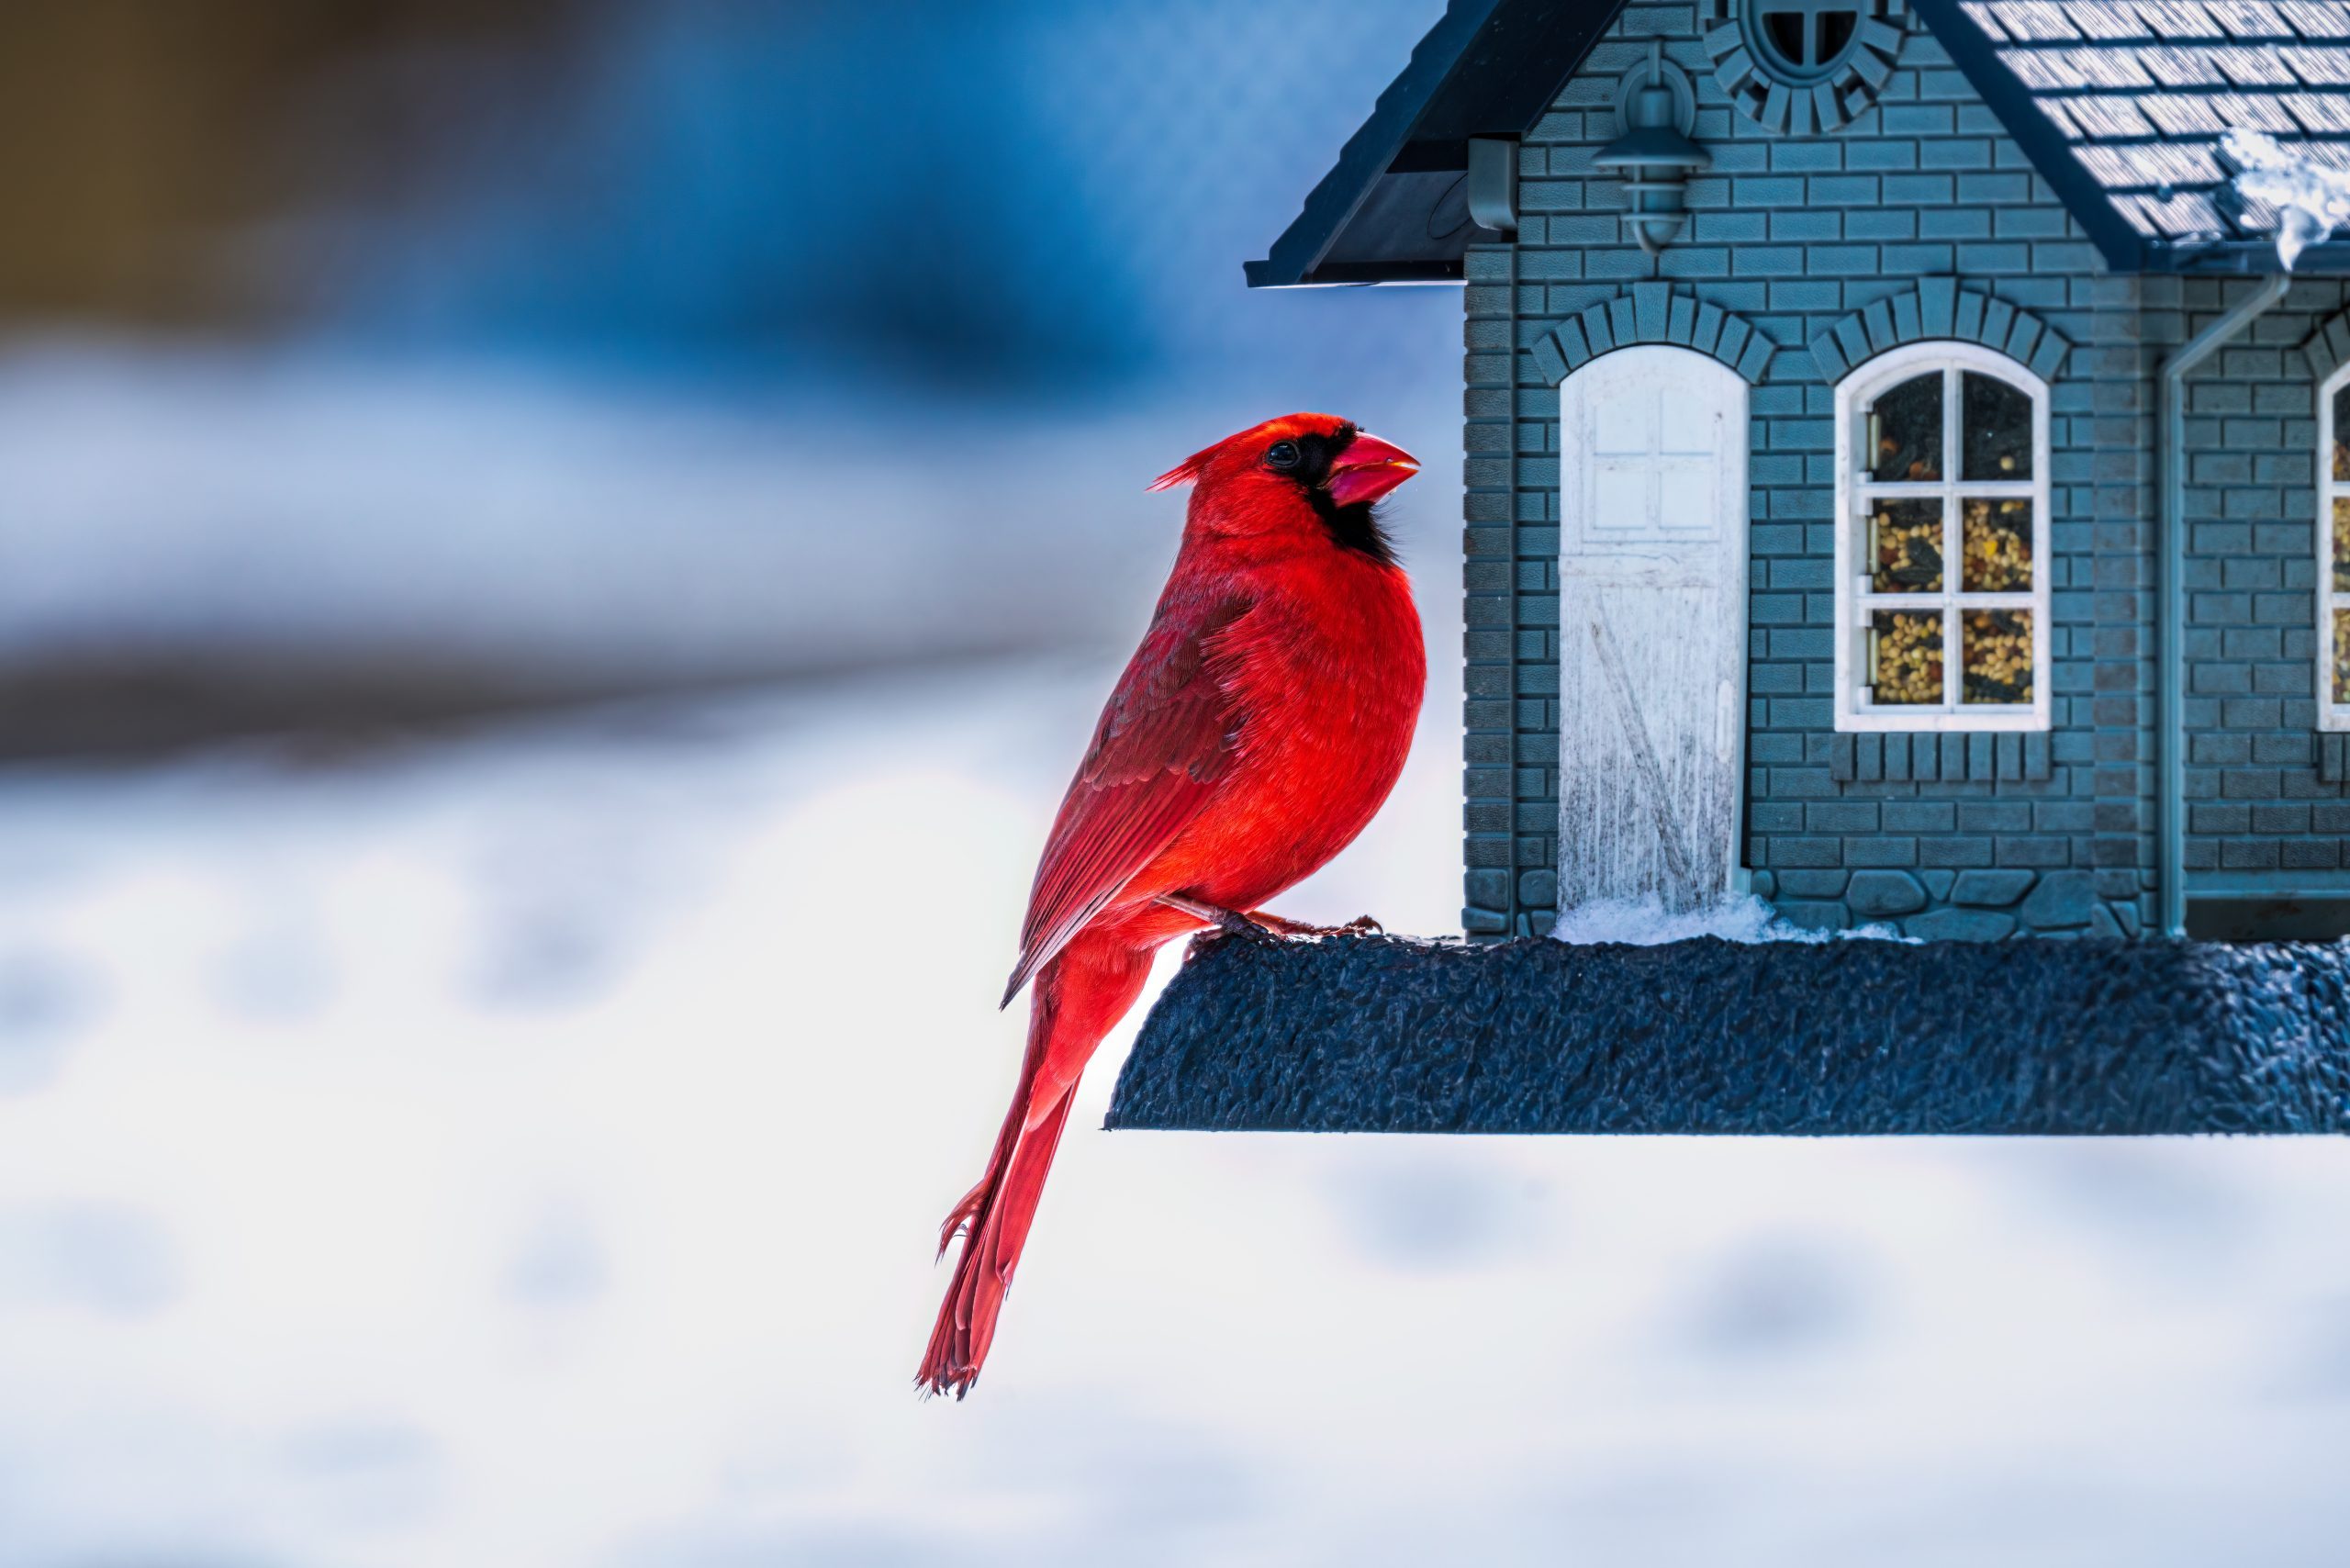 How to Do Winter Birding Right